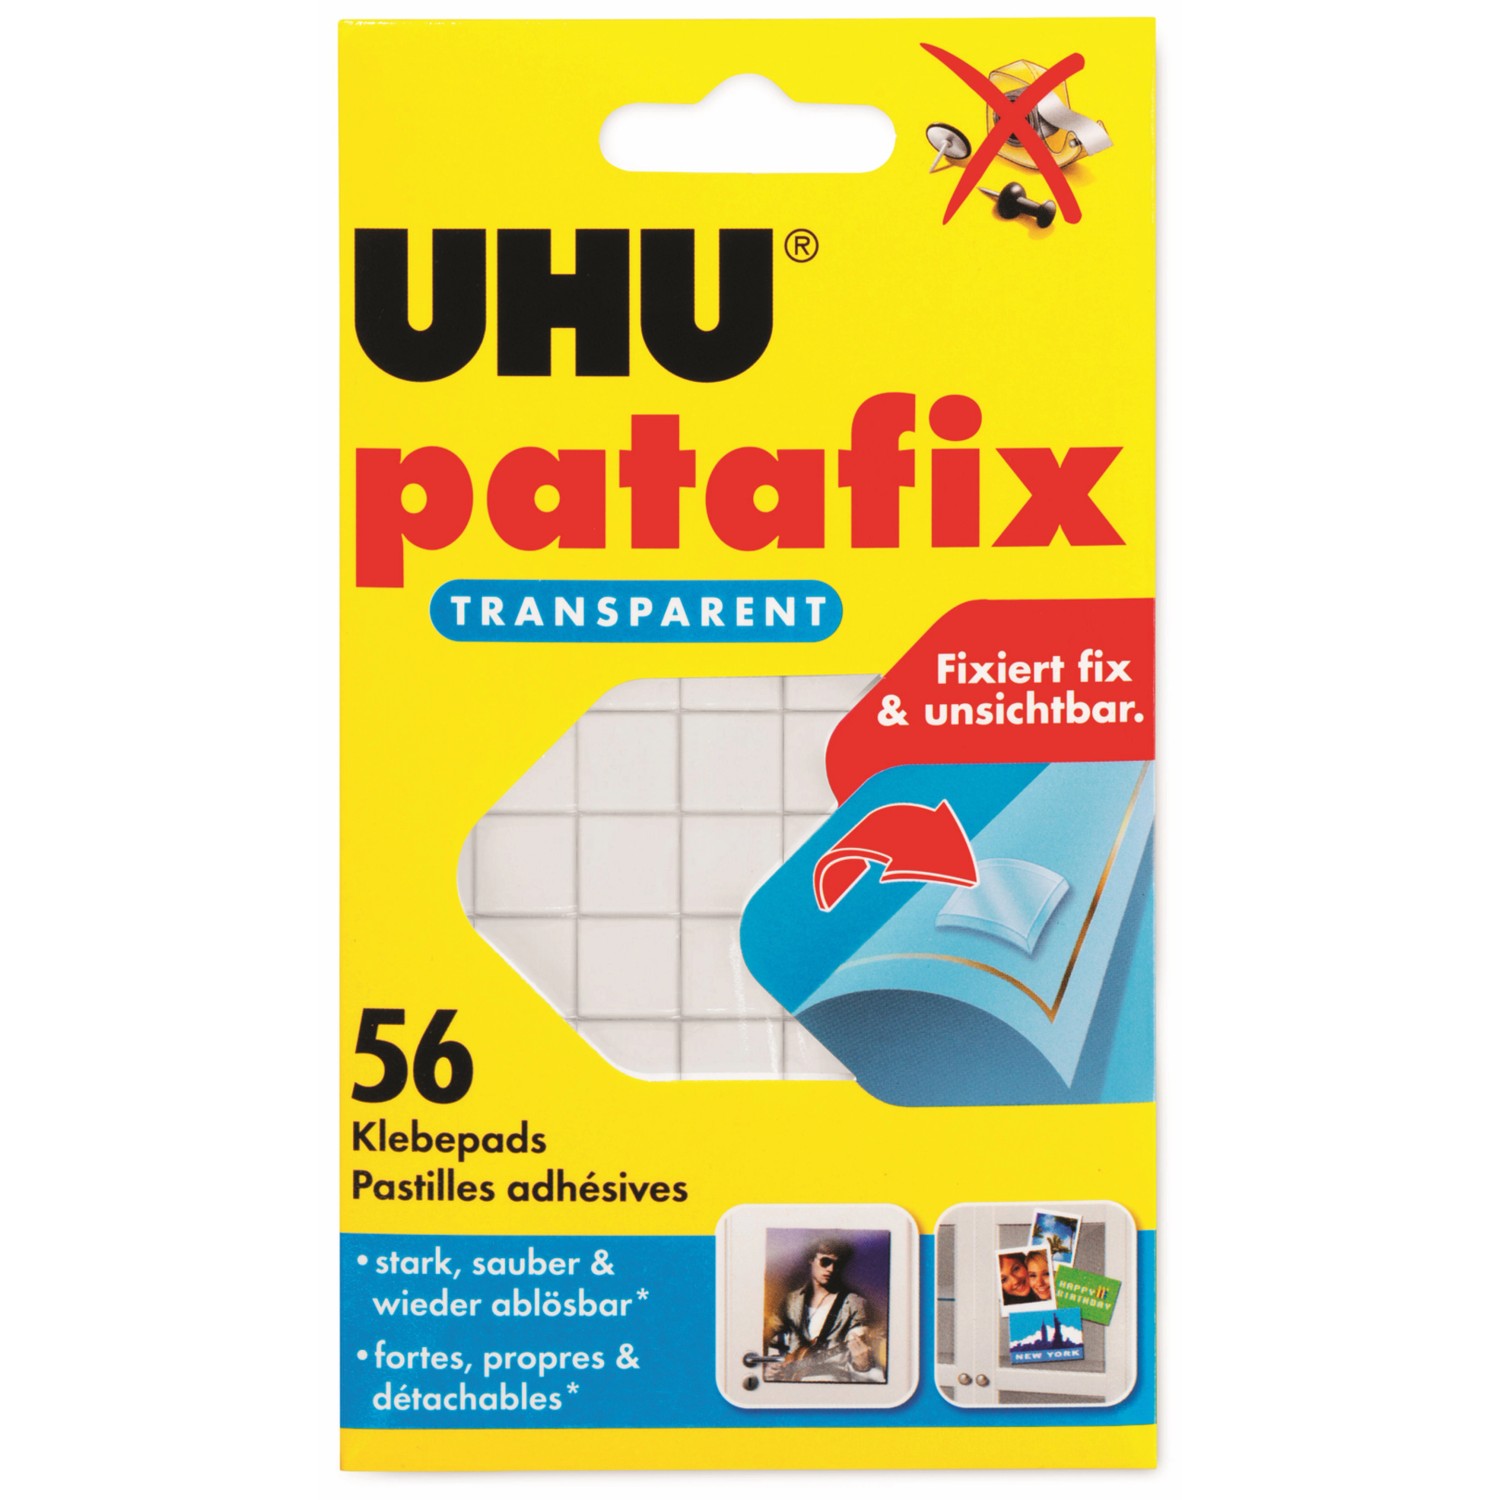 Uhu Patafix transparent 56 Pads günstig online kaufen